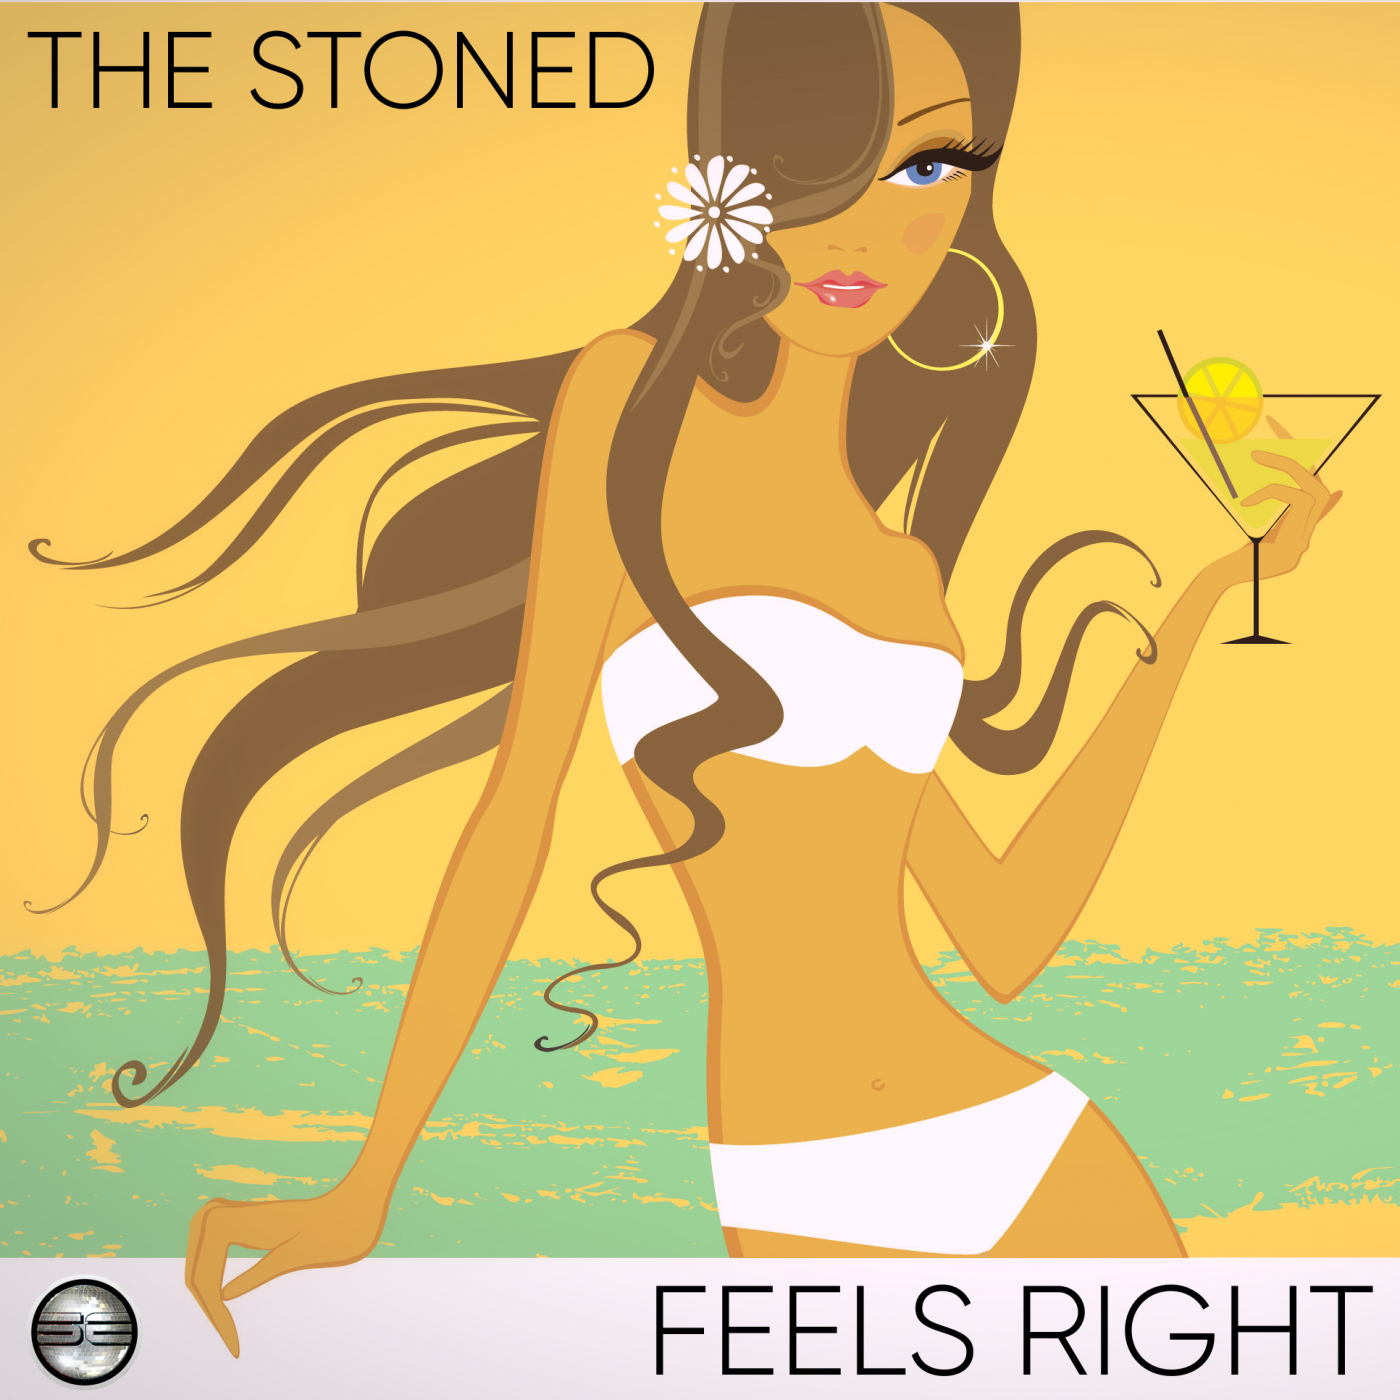 Feel stoned. Feel right.